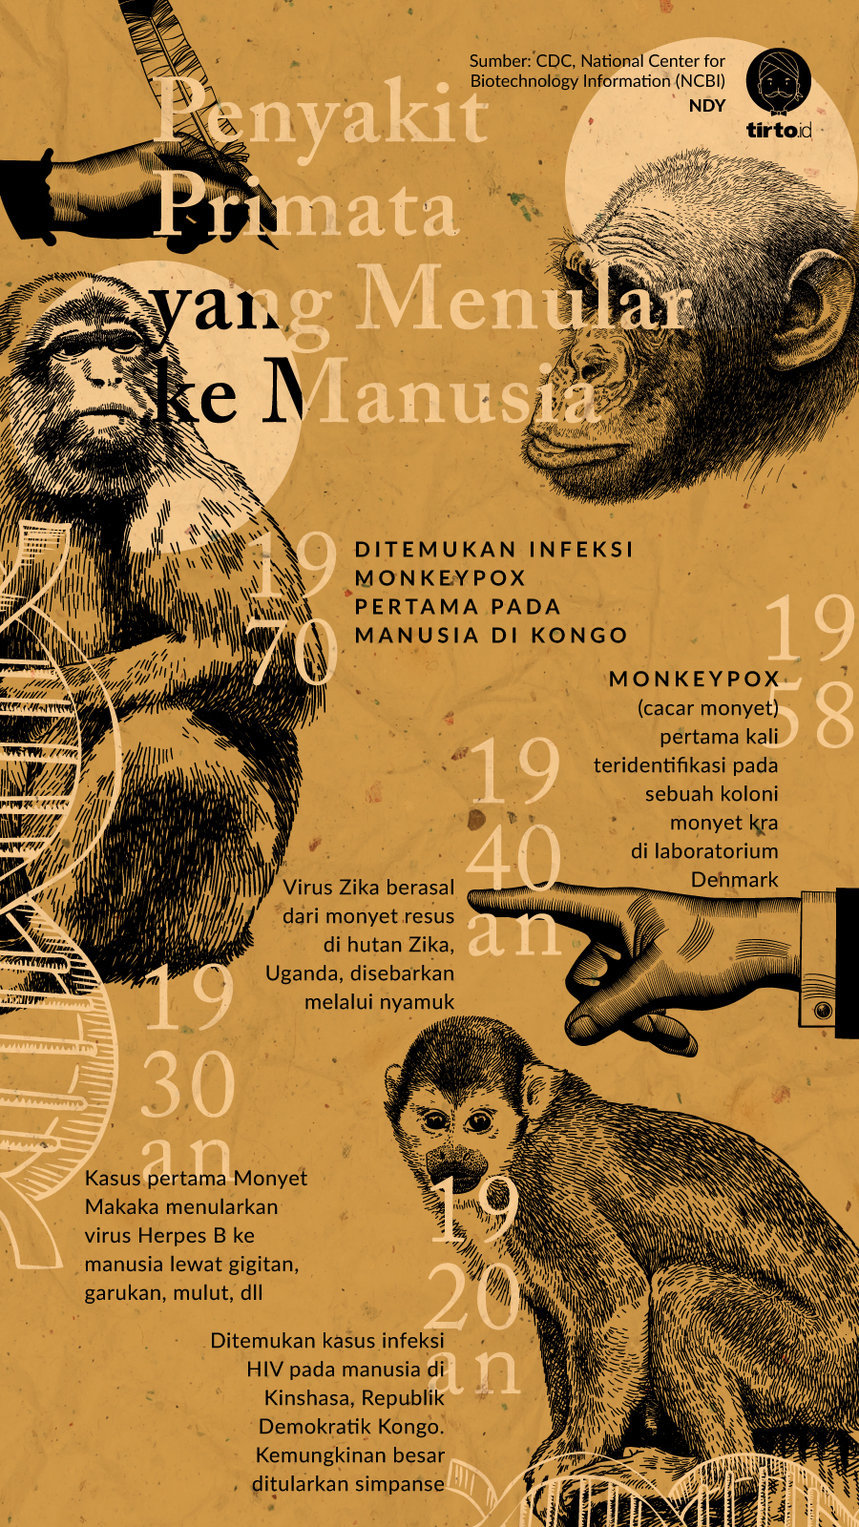 Infografik Penyakit Primata yang menular ke manusia